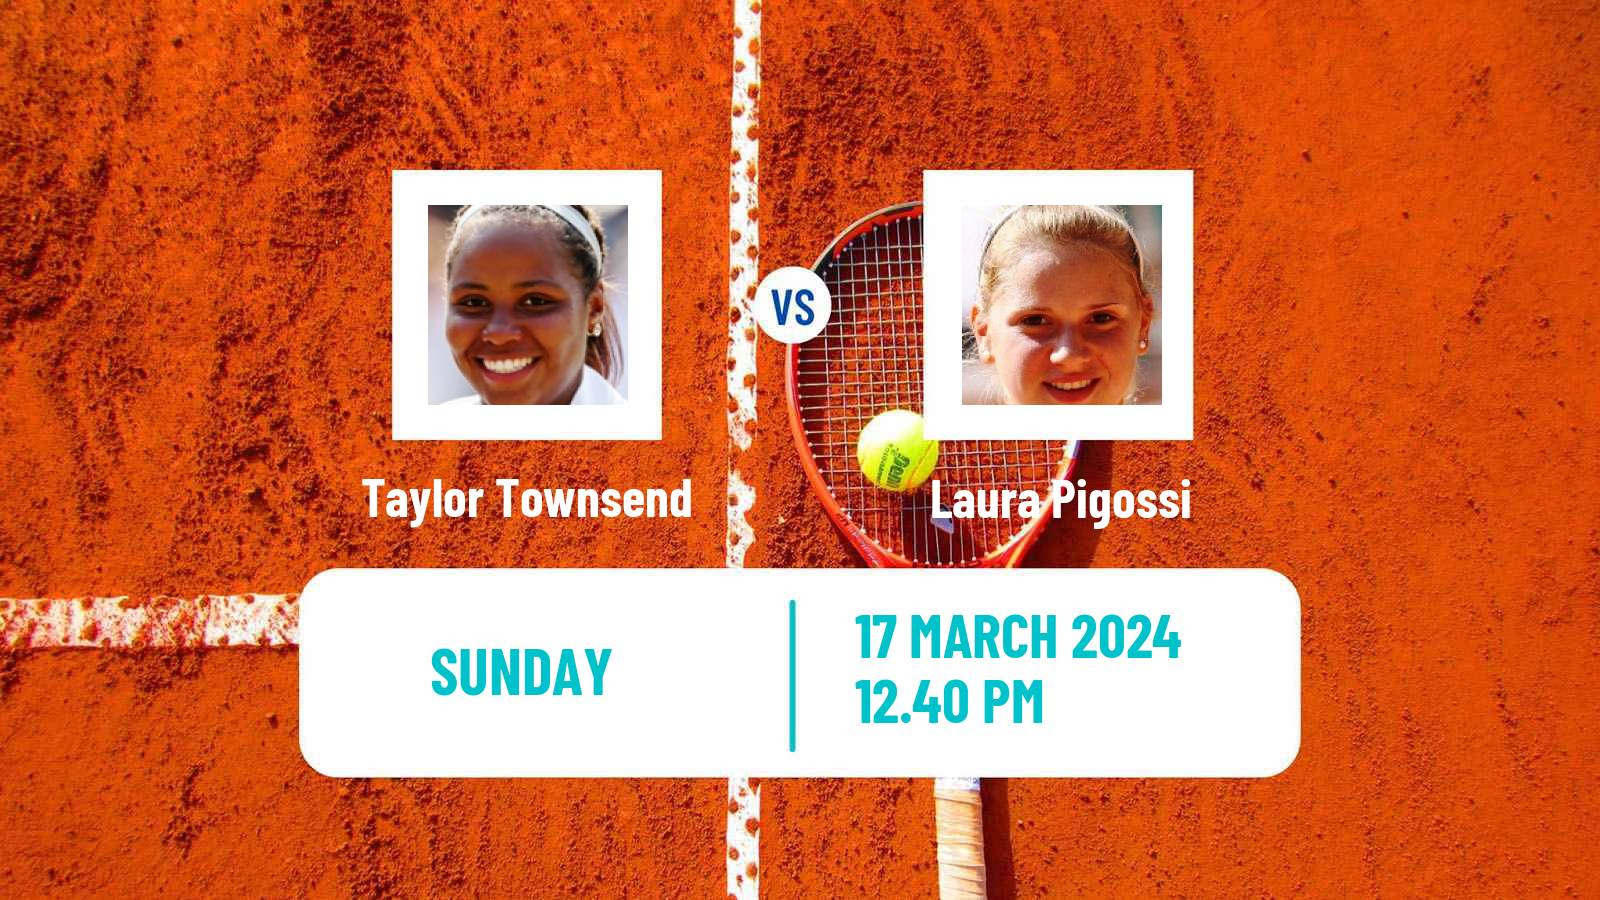 Tennis WTA Miami Taylor Townsend - Laura Pigossi